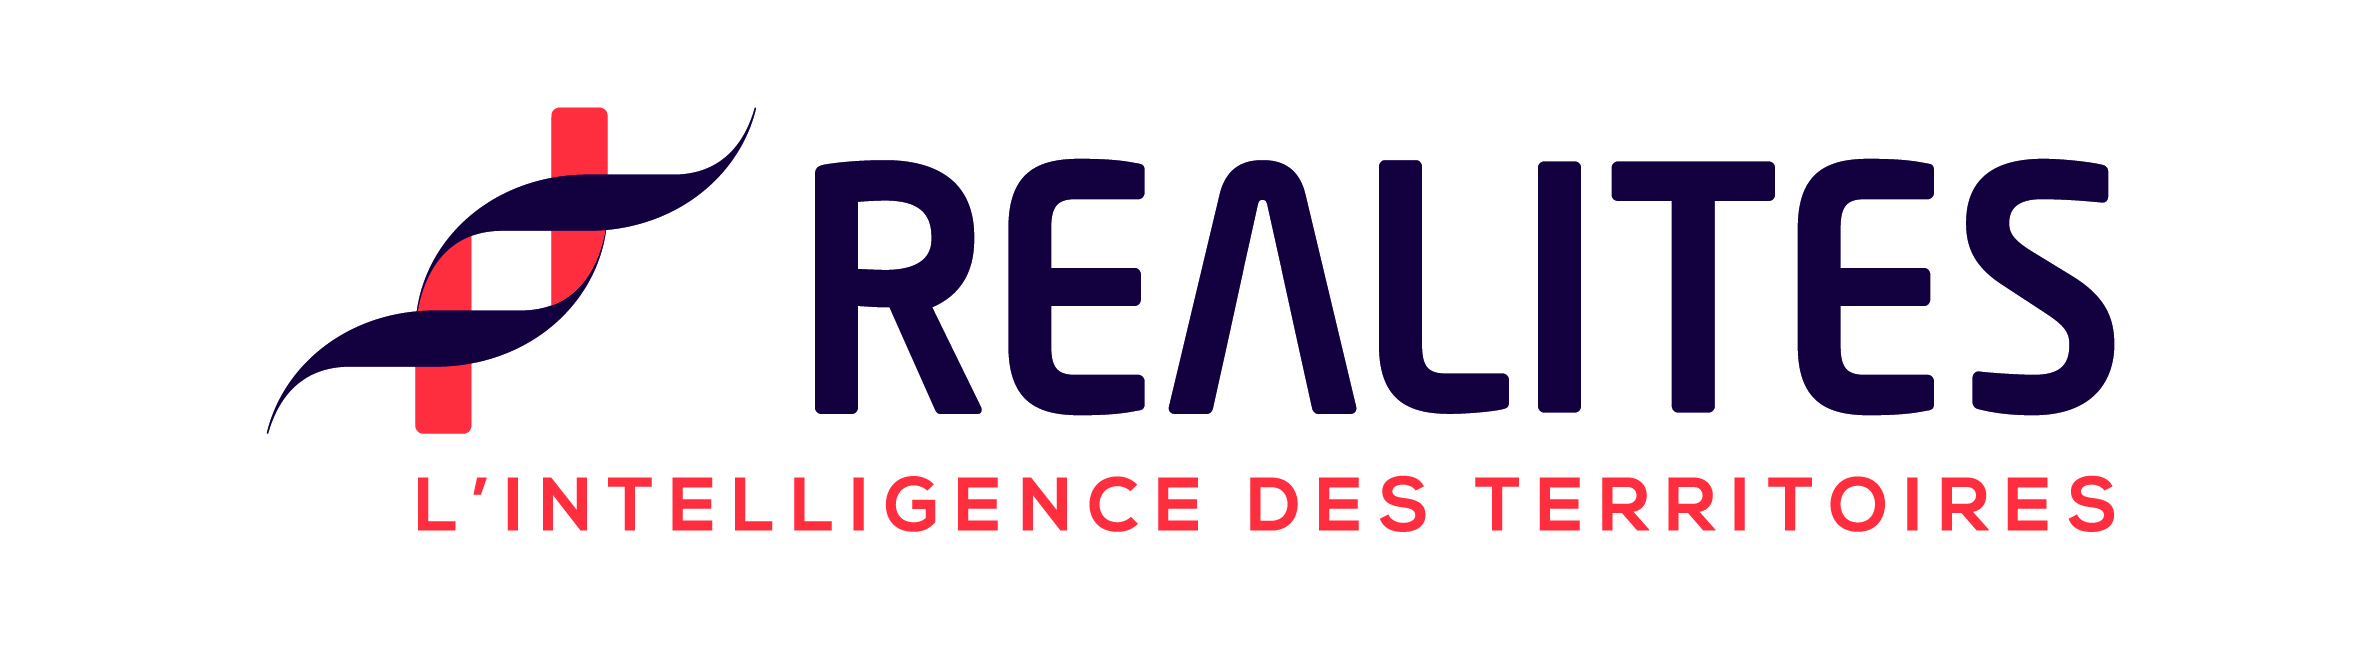 REALITES PORTUGAL, S.A. logo